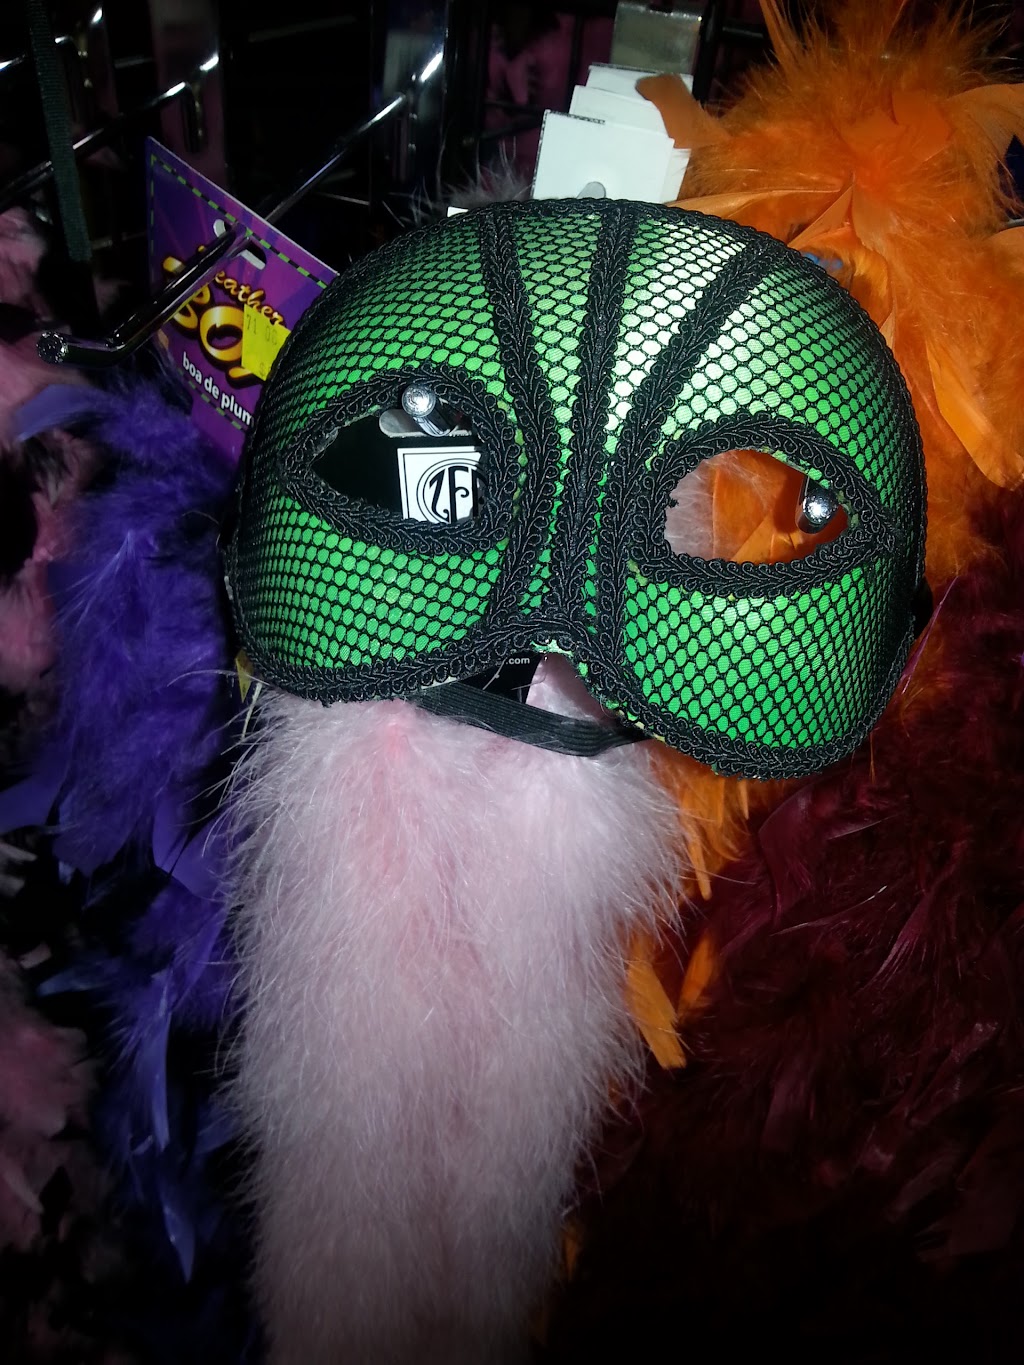 Mr. Funs Costumes & Magic Emporium | 2104 Front St, Cuyahoga Falls, OH 44221, USA | Phone: (330) 923-3339